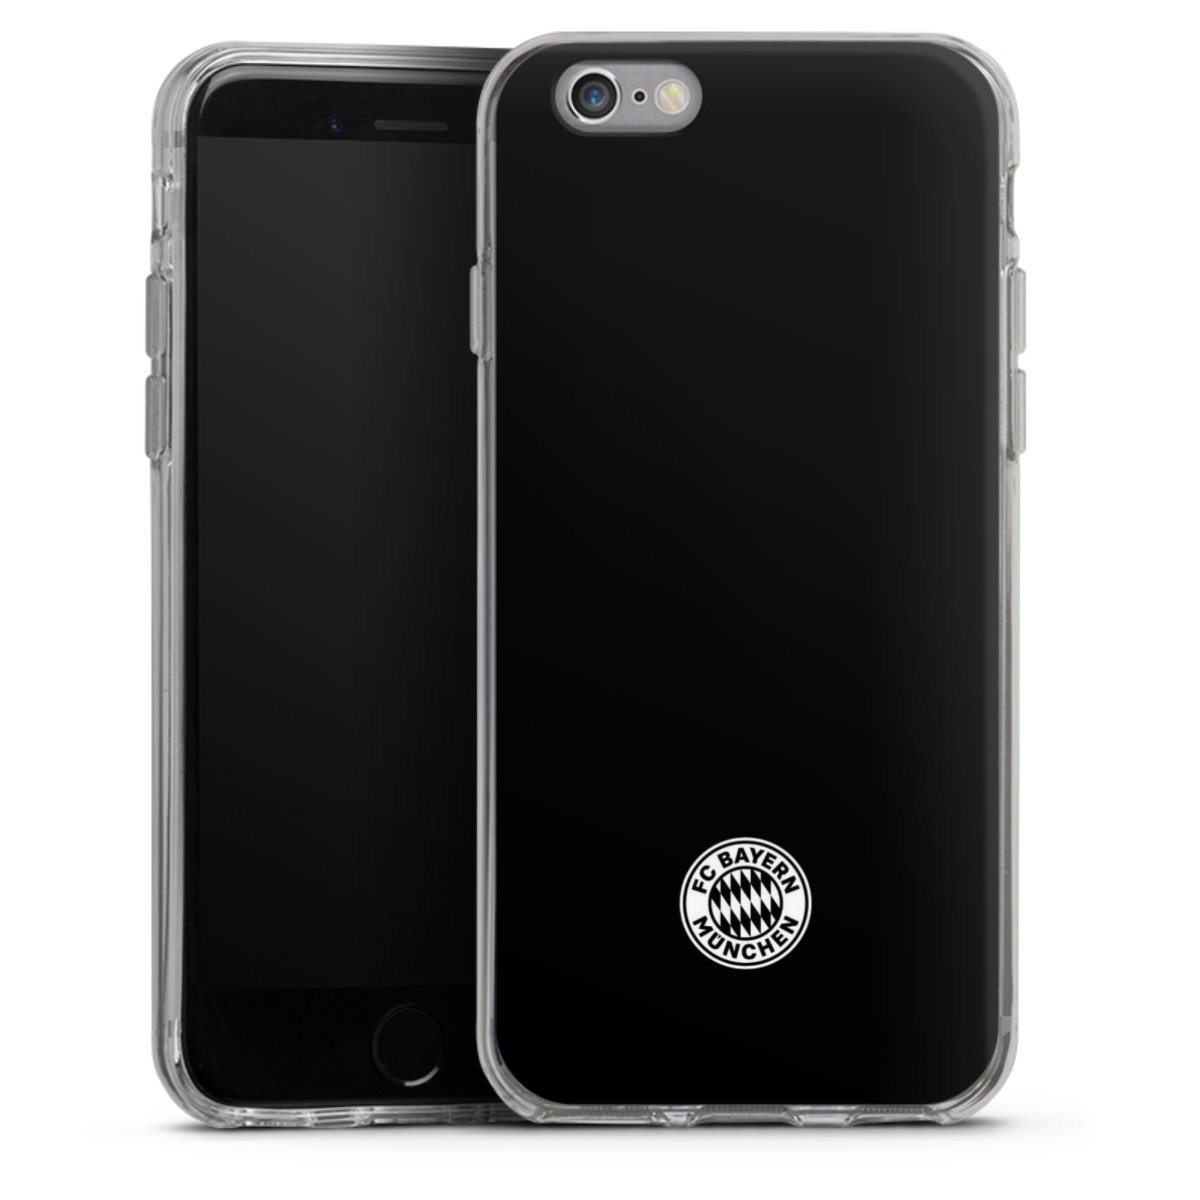 Pauli Totenkopf Offizielles Lizenzprodukt DeinDesign Silikon Hülle kompatibel mit Apple iPhone 6 Case Schutzhülle FC St